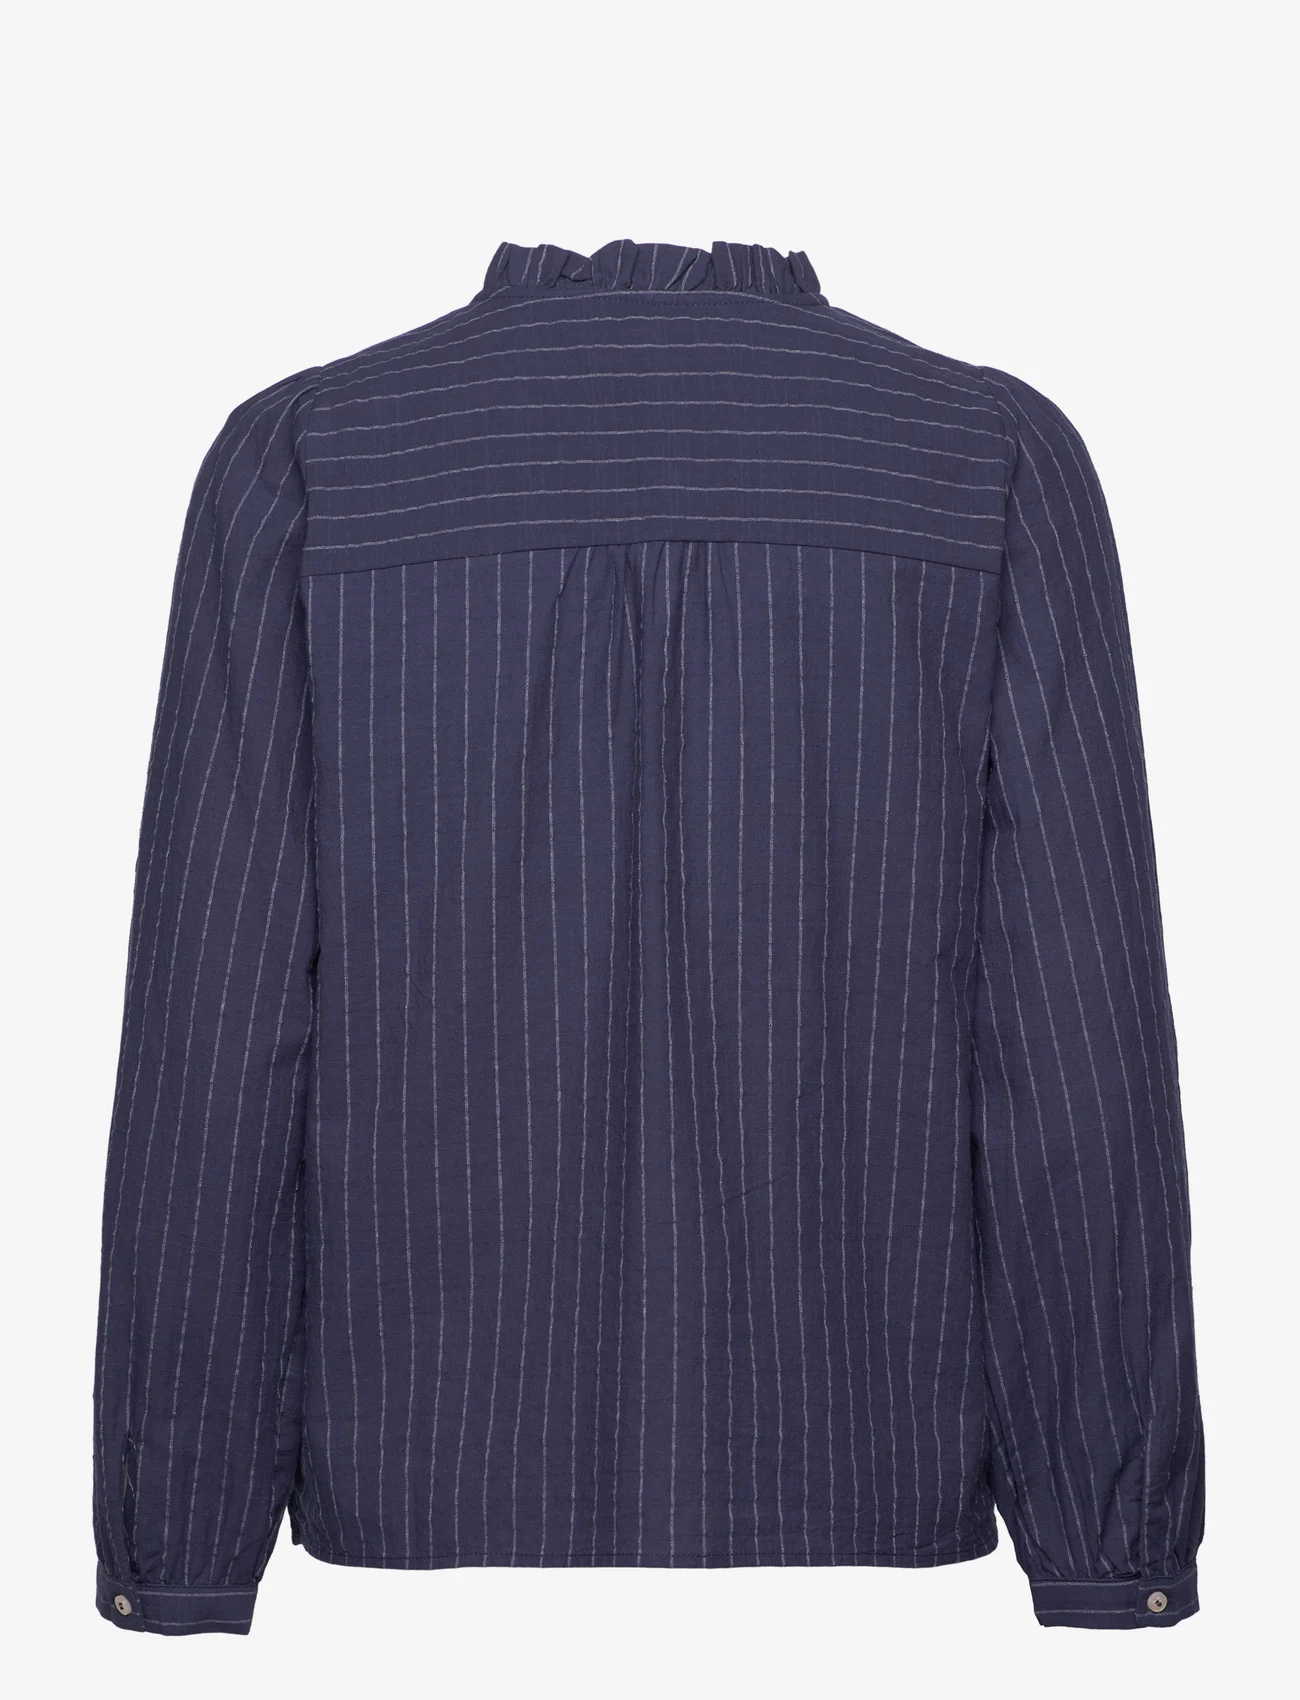 Lollys Laundry - River Shirt - long-sleeved shirts - dark blue - 1